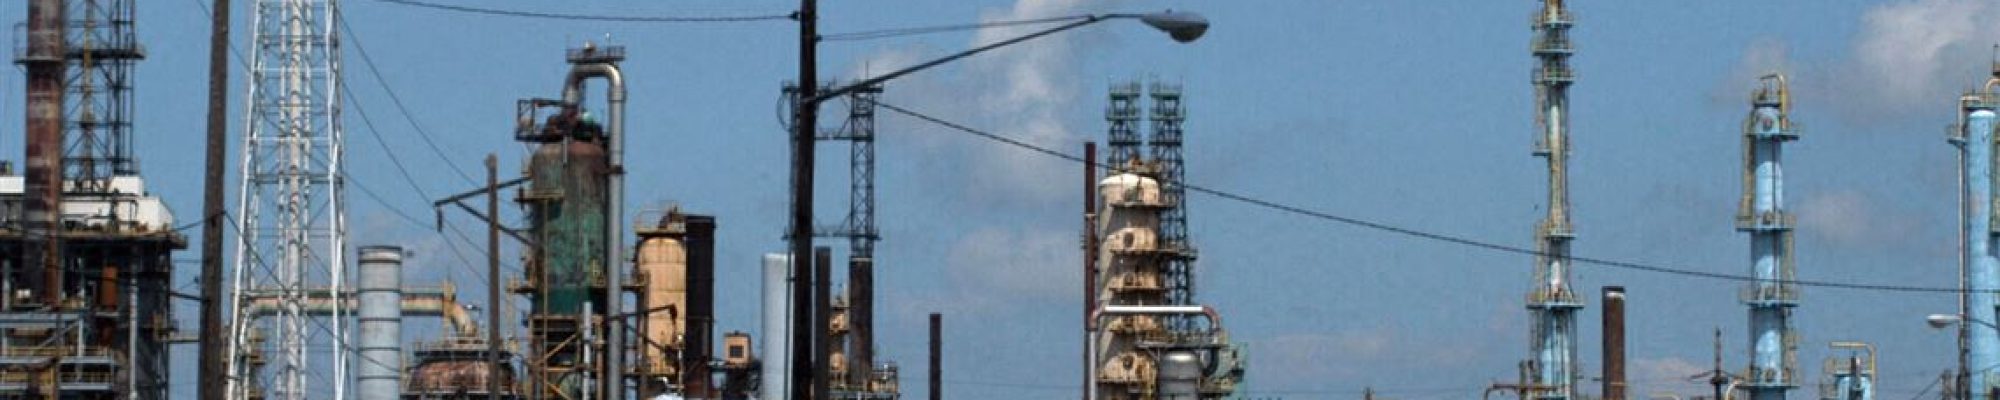 Local-BP-Husky-refinery-awaits-promised-improvements